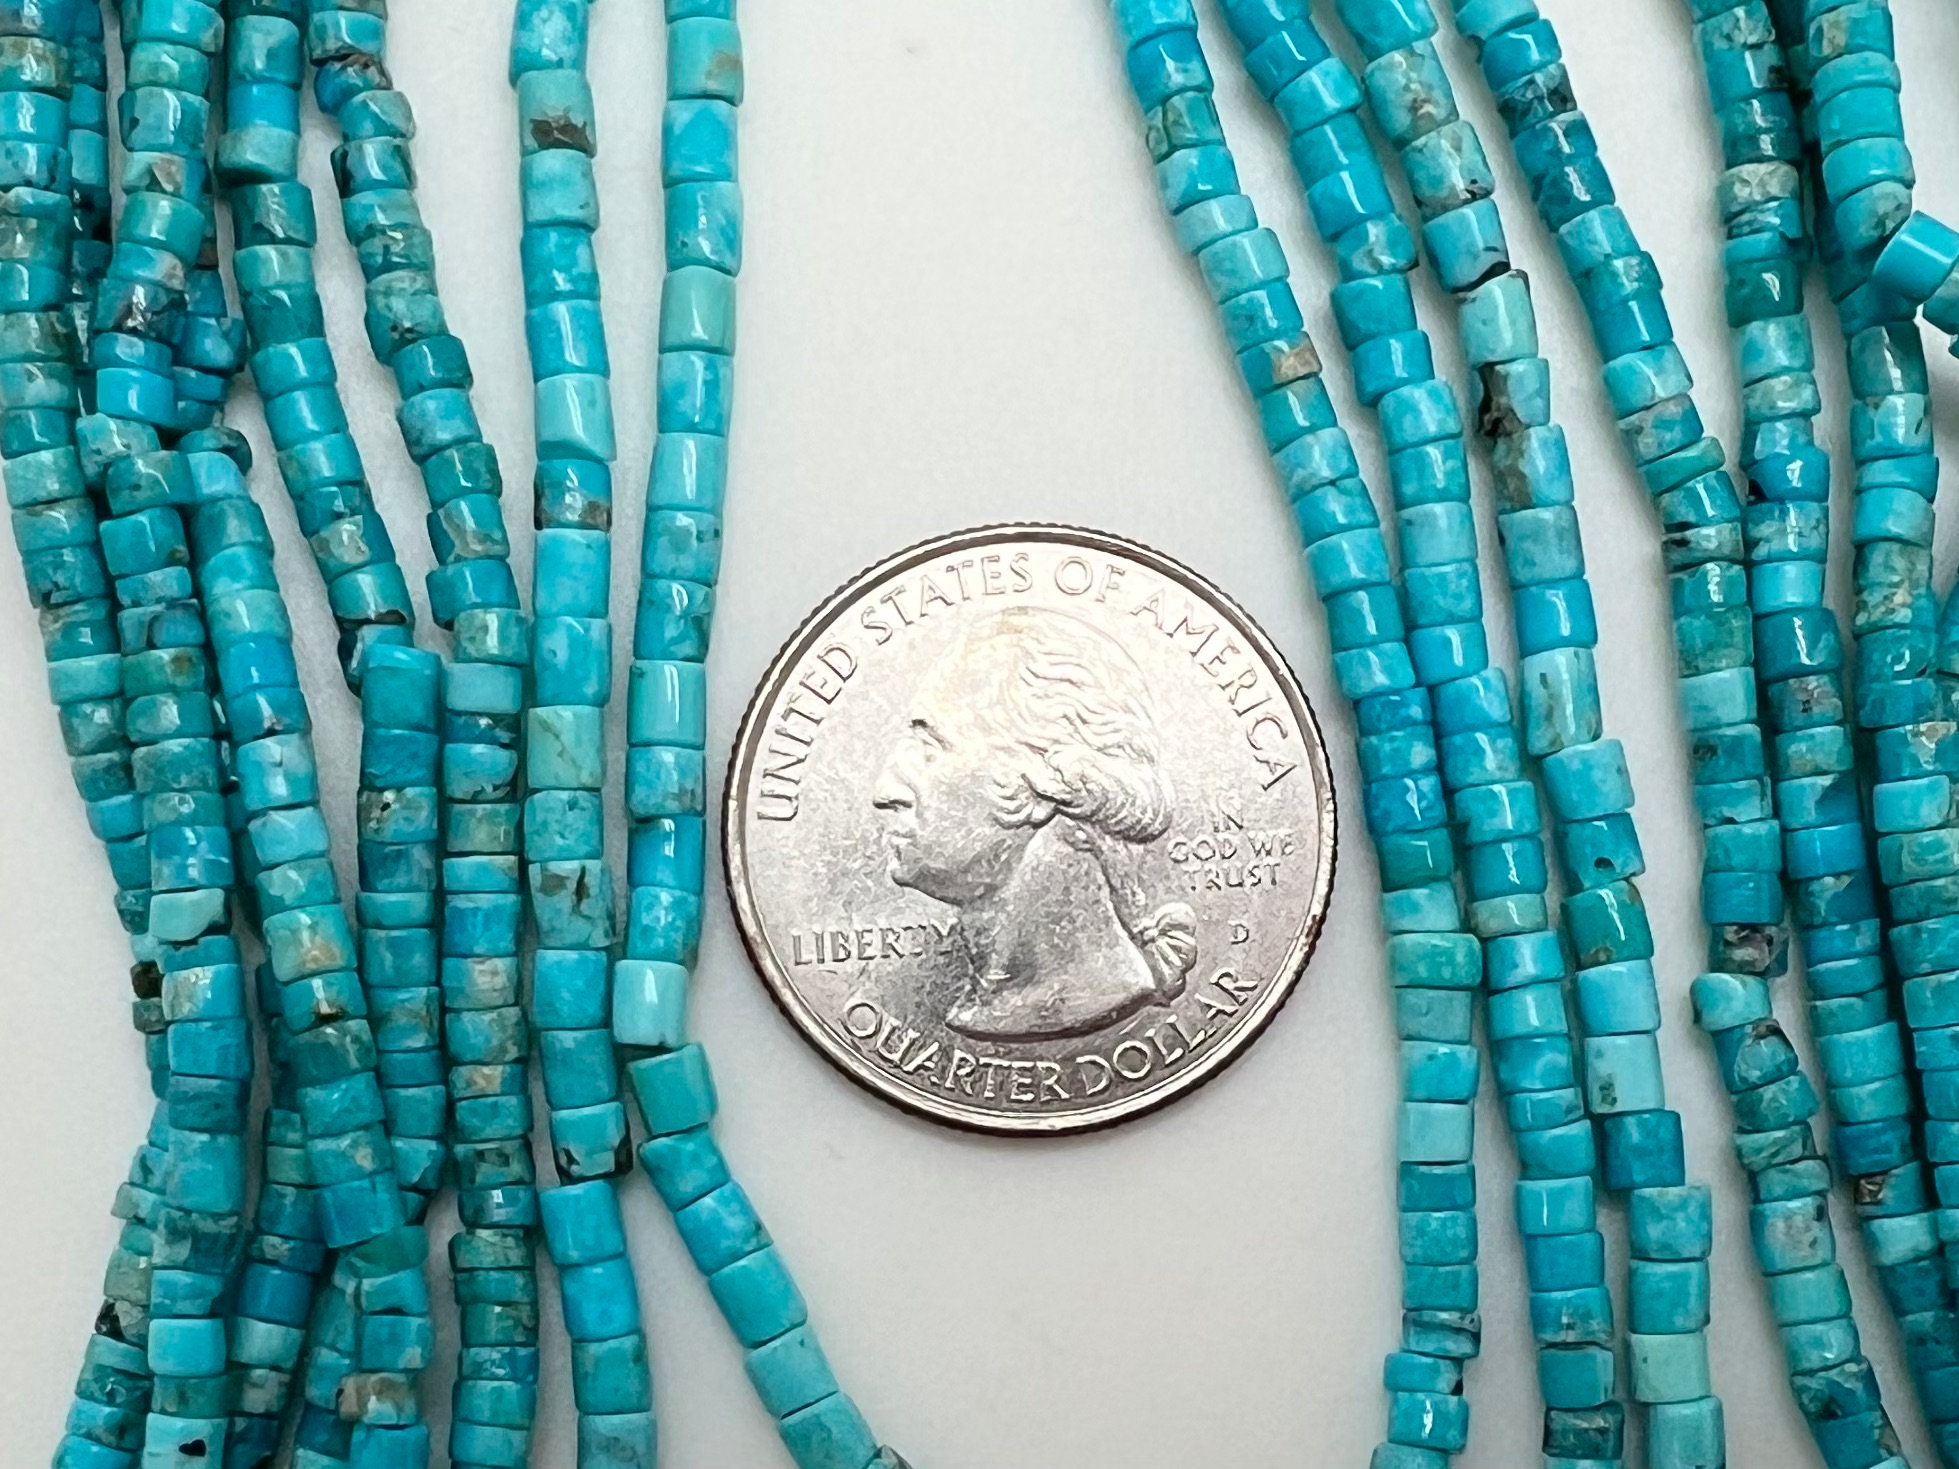 4mm Heishi Tube Kingman Turquoise Beads - Jewelry Making Supplies